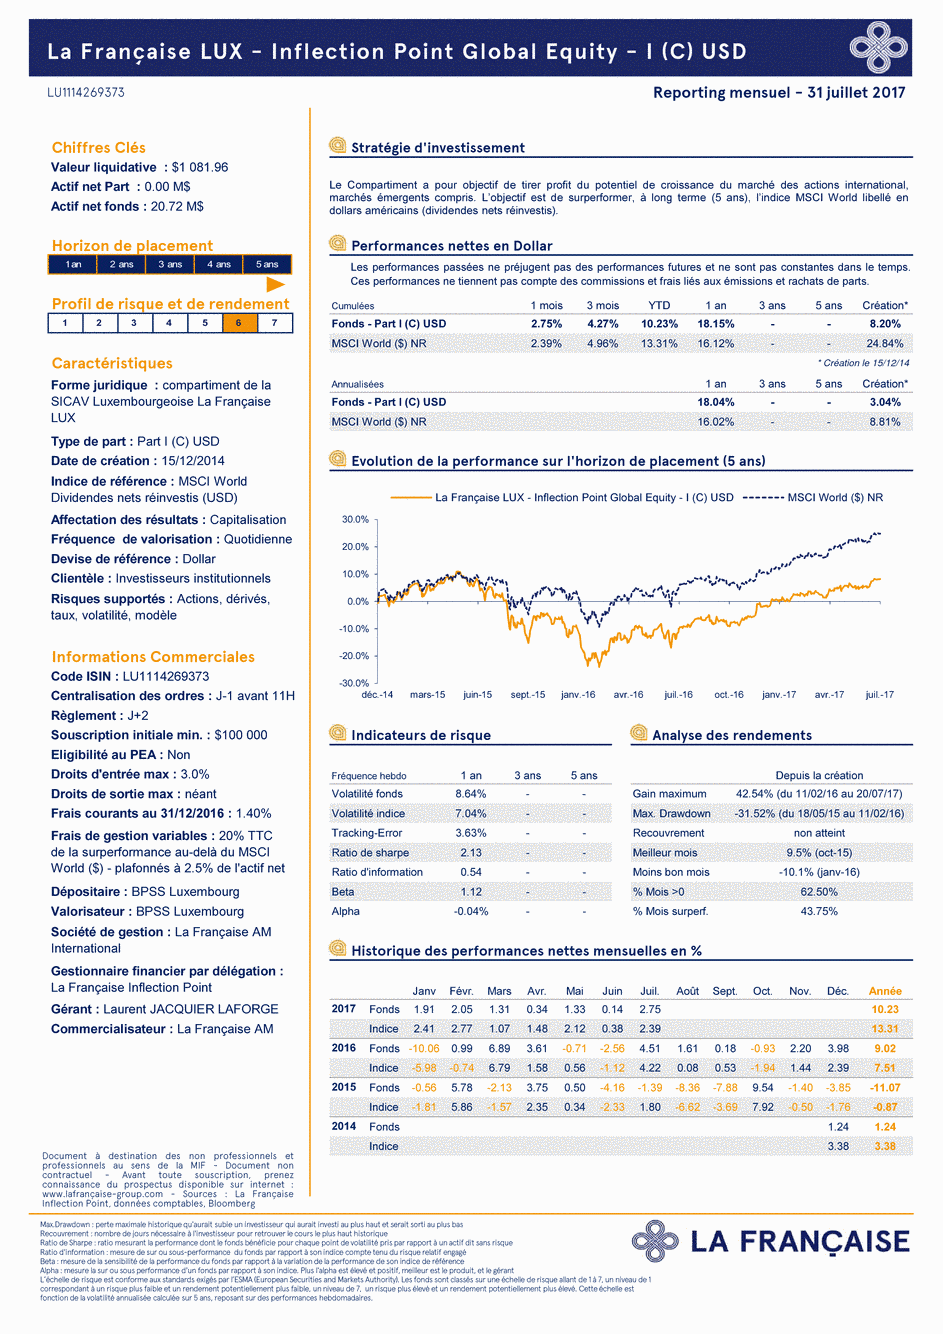 Reporting La Française LUX - Inflection Point Global Equity - I (C) USD - 31/07/2017 - Français